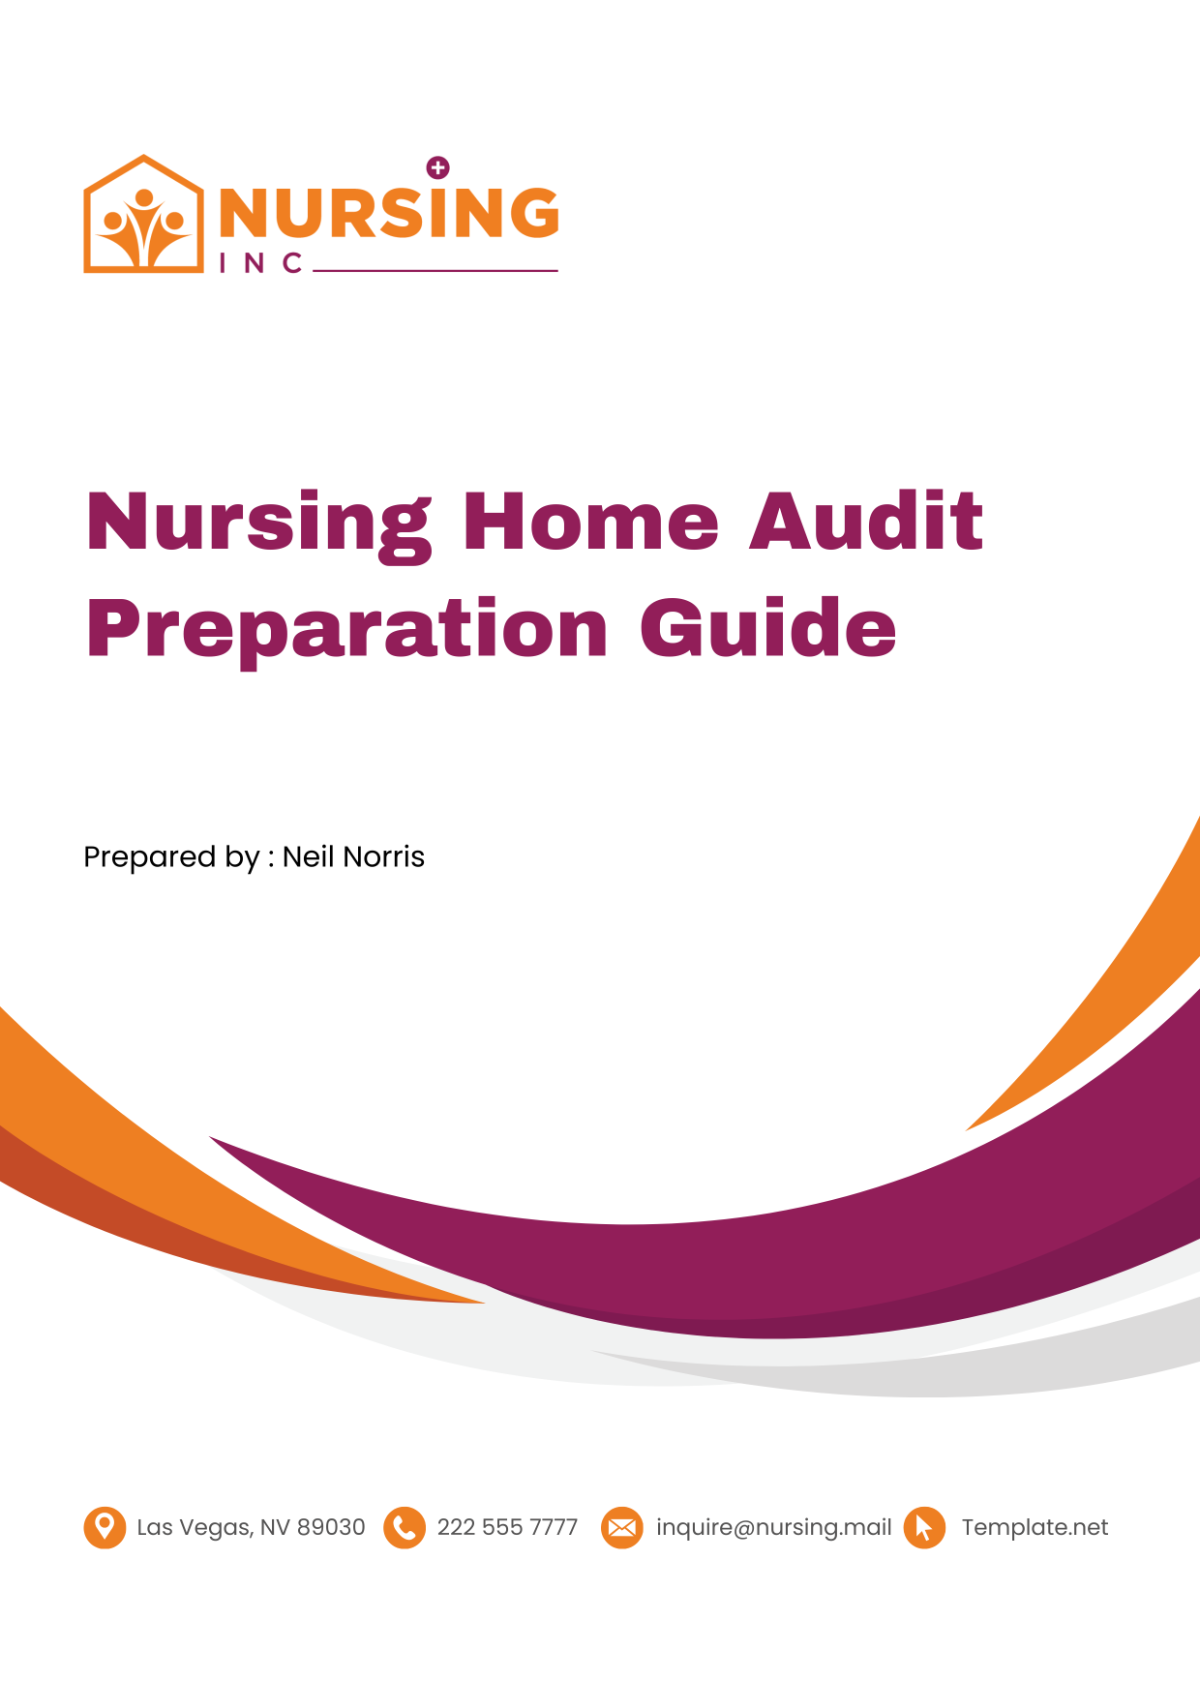 Nursing Home Audit Preparation Guide Template